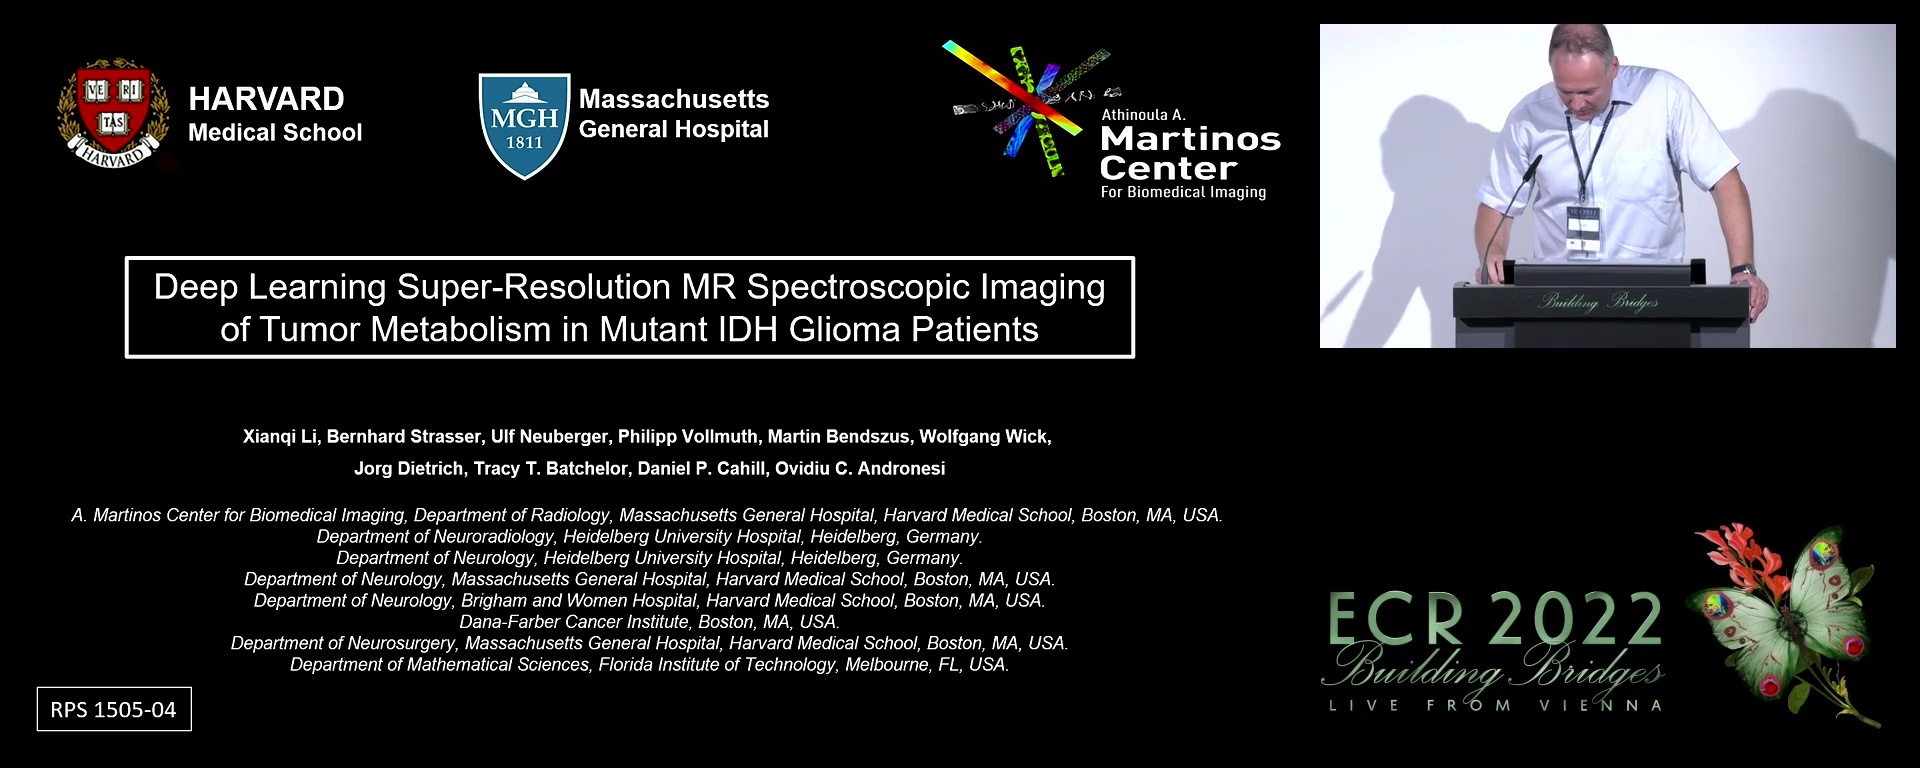 Deep learning super-resolution MR spectroscopic imaging of brain metabolism and mutant IDH glioma - Ovidiu Andronesi, Charlestown / US